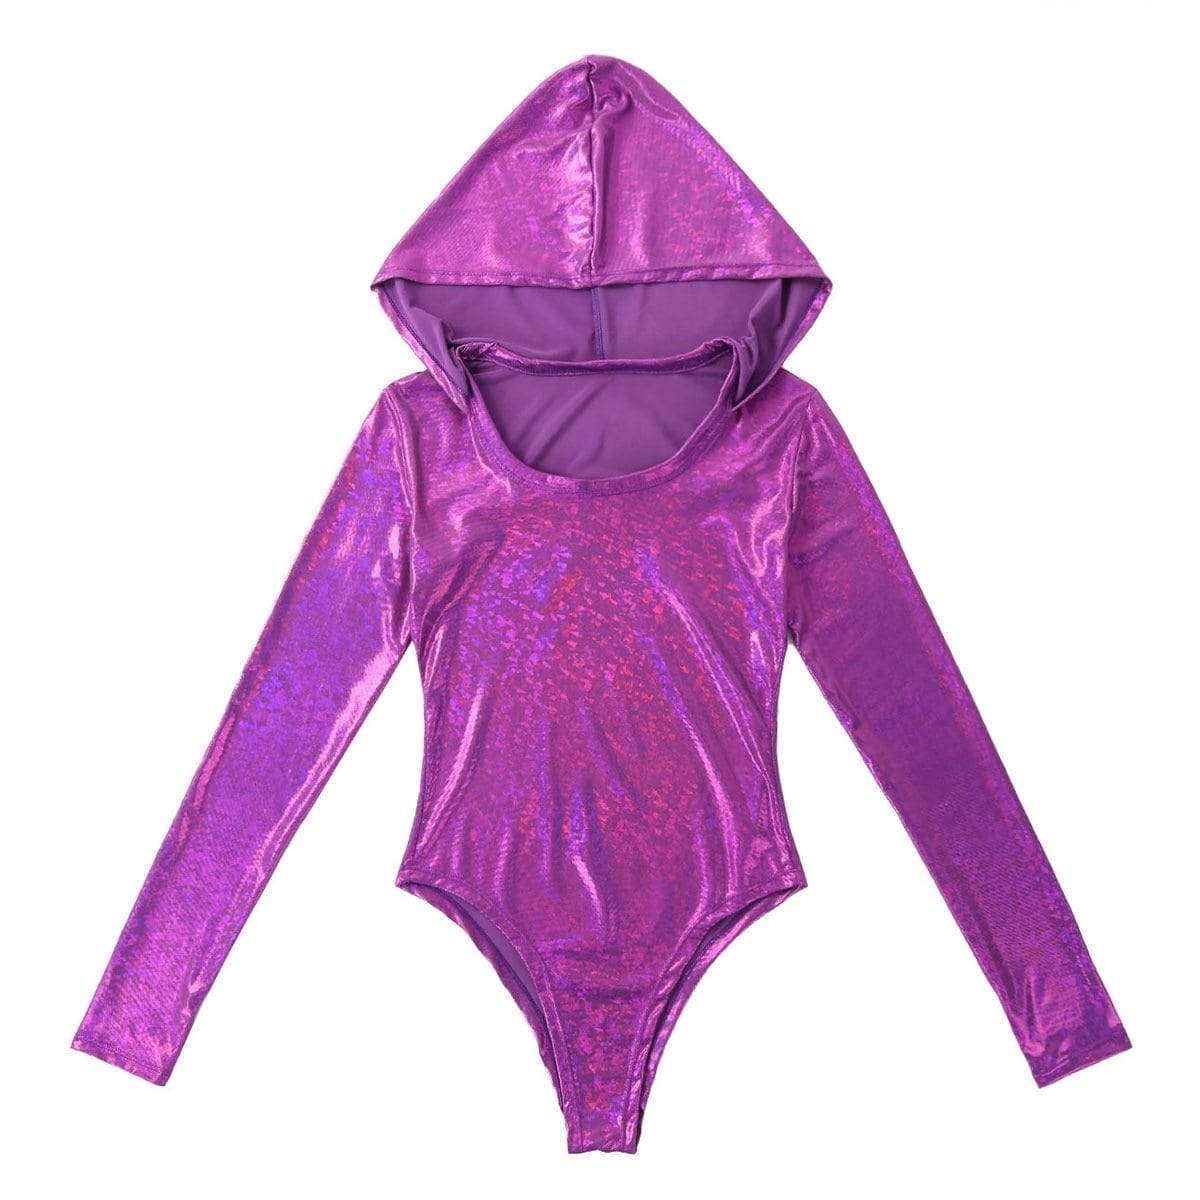 Kinky Cloth 201236202 Metallic Romper Hooded Bodysuit